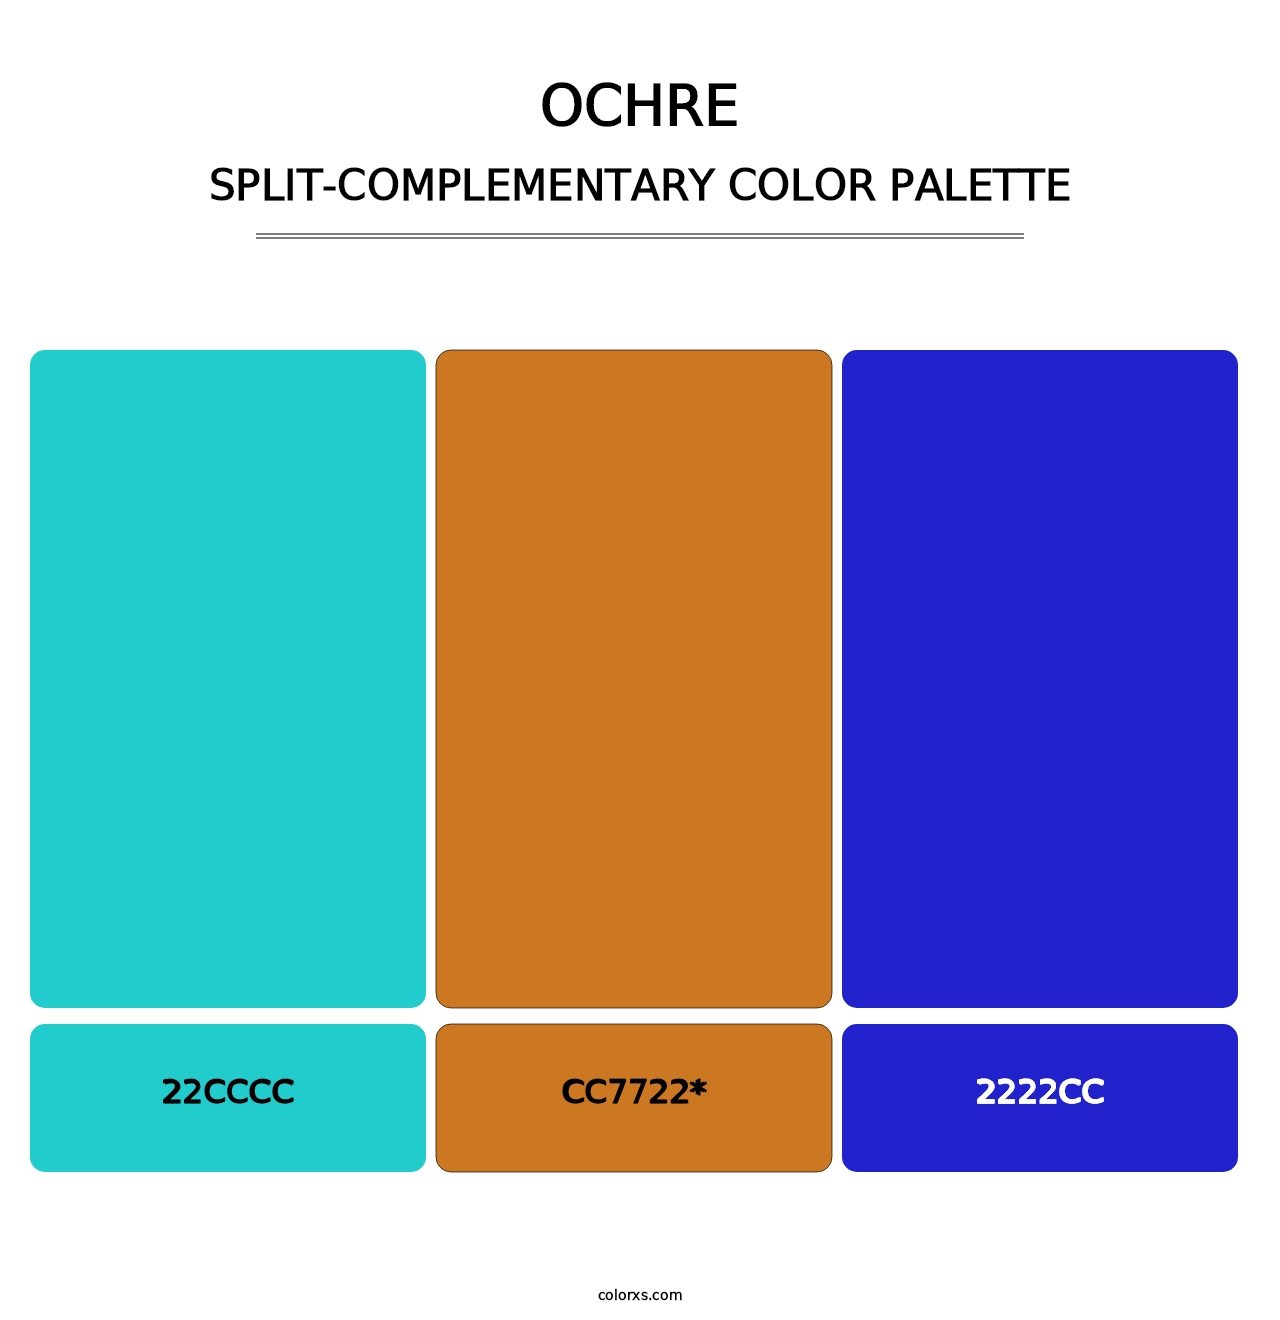 Ochre - Split-Complementary Color Palette